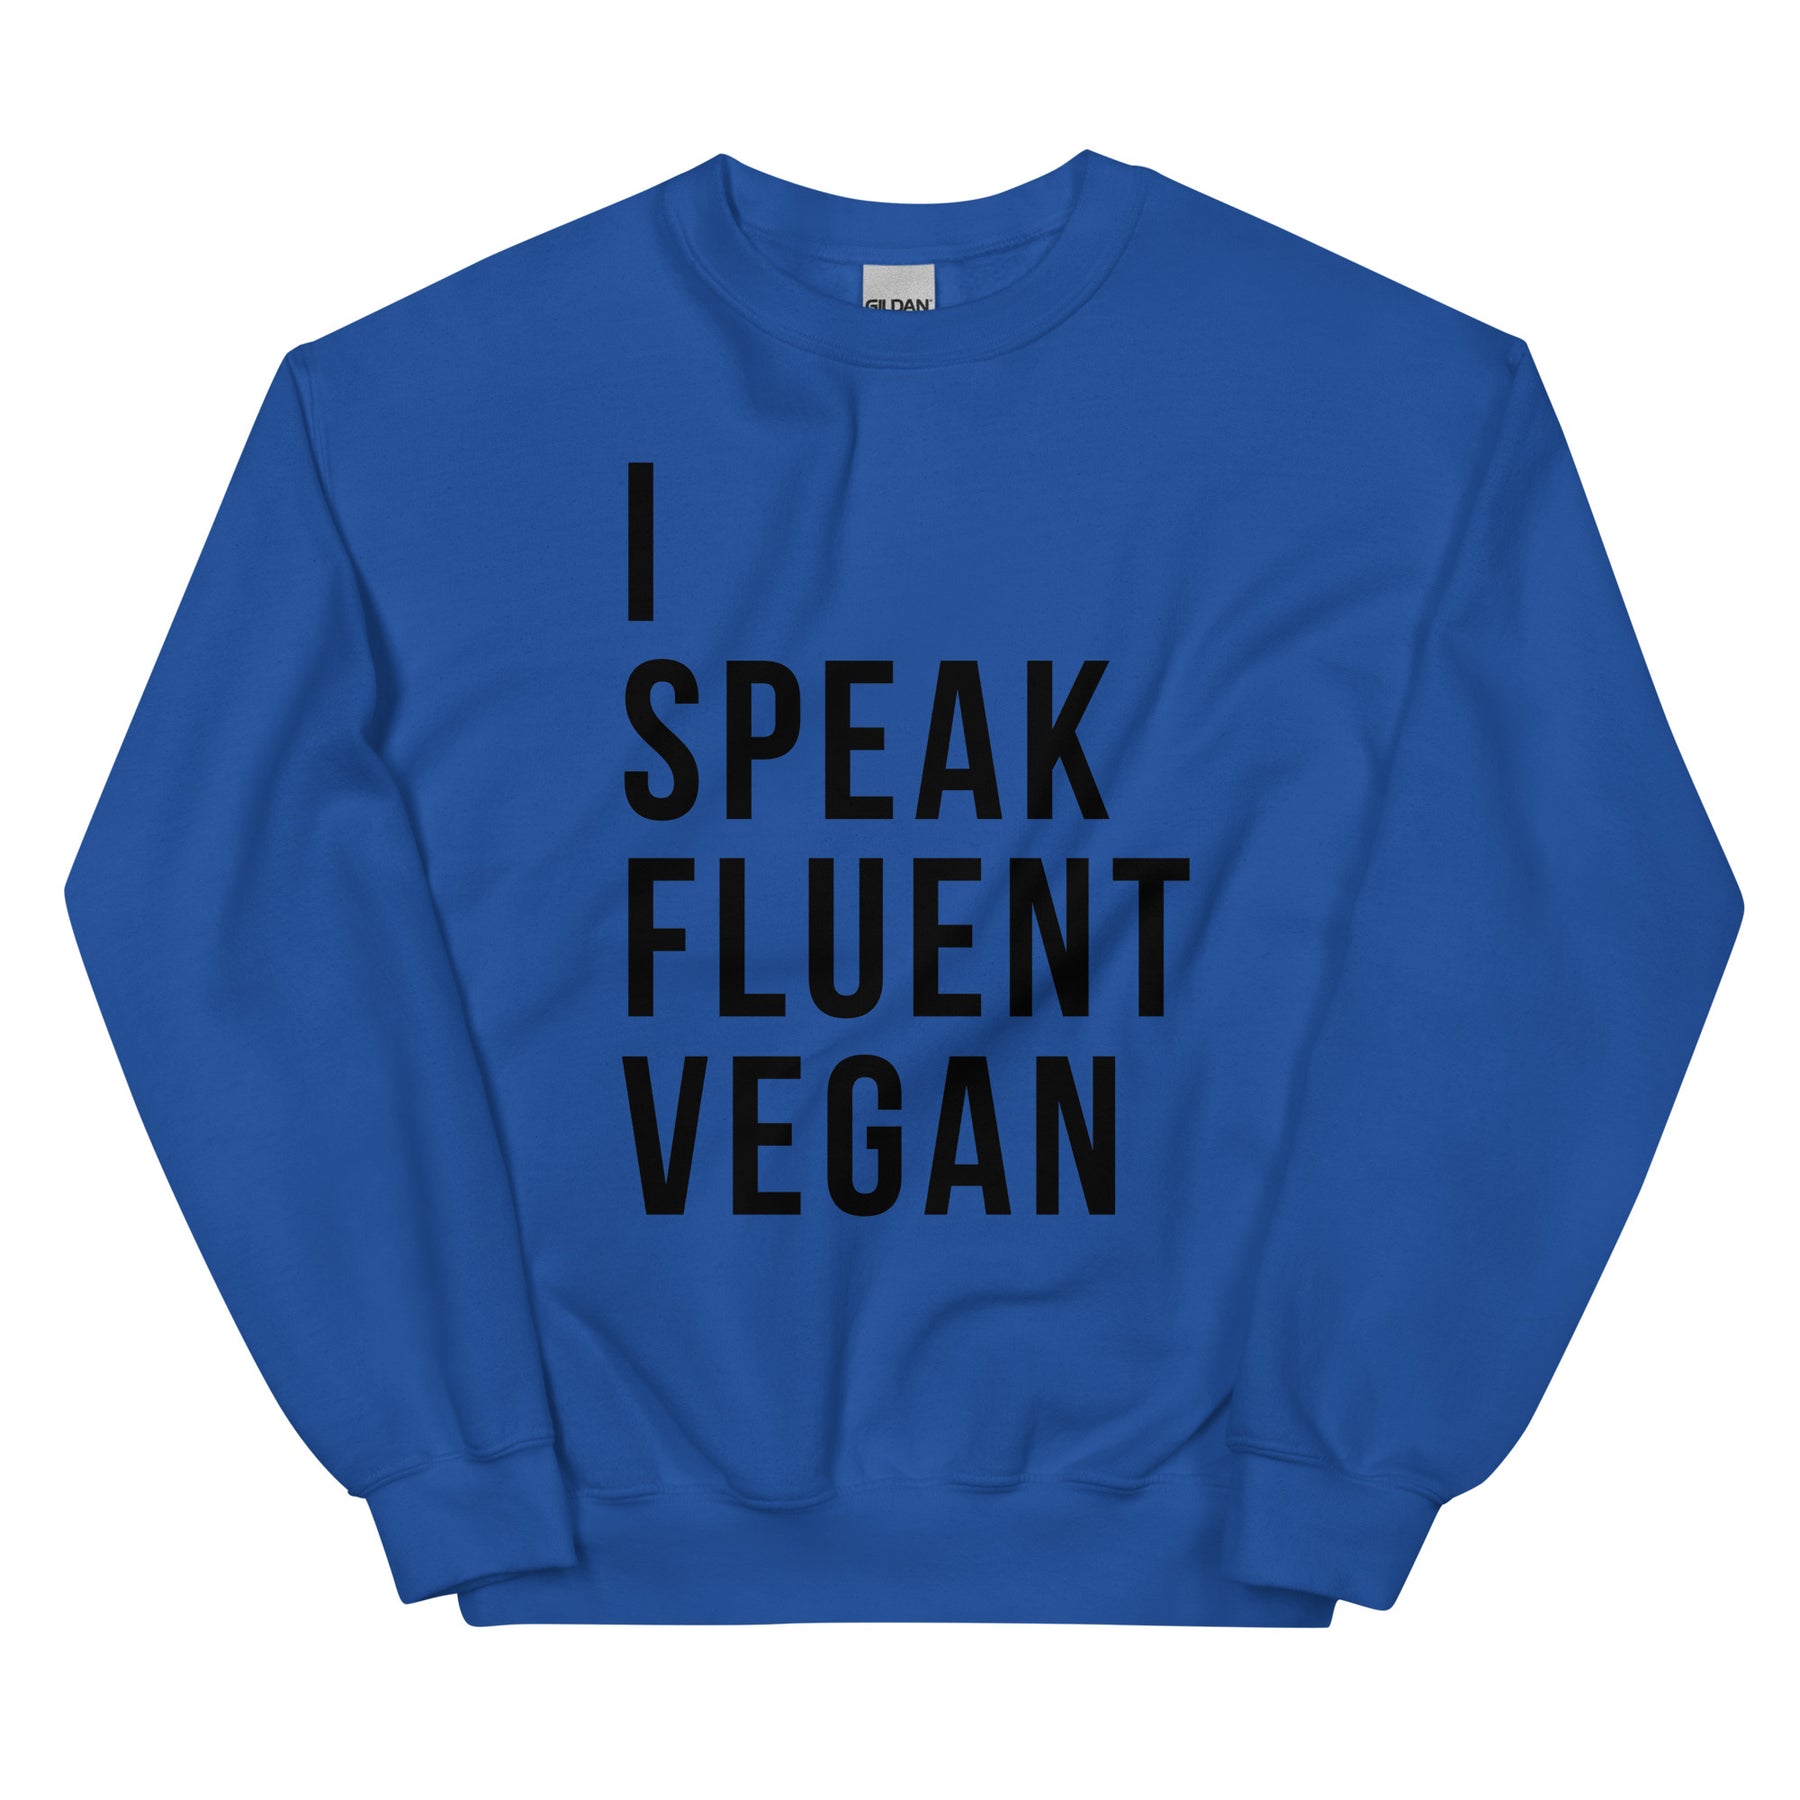 I SPEAK FLUENT VEGAN Sweatshirt